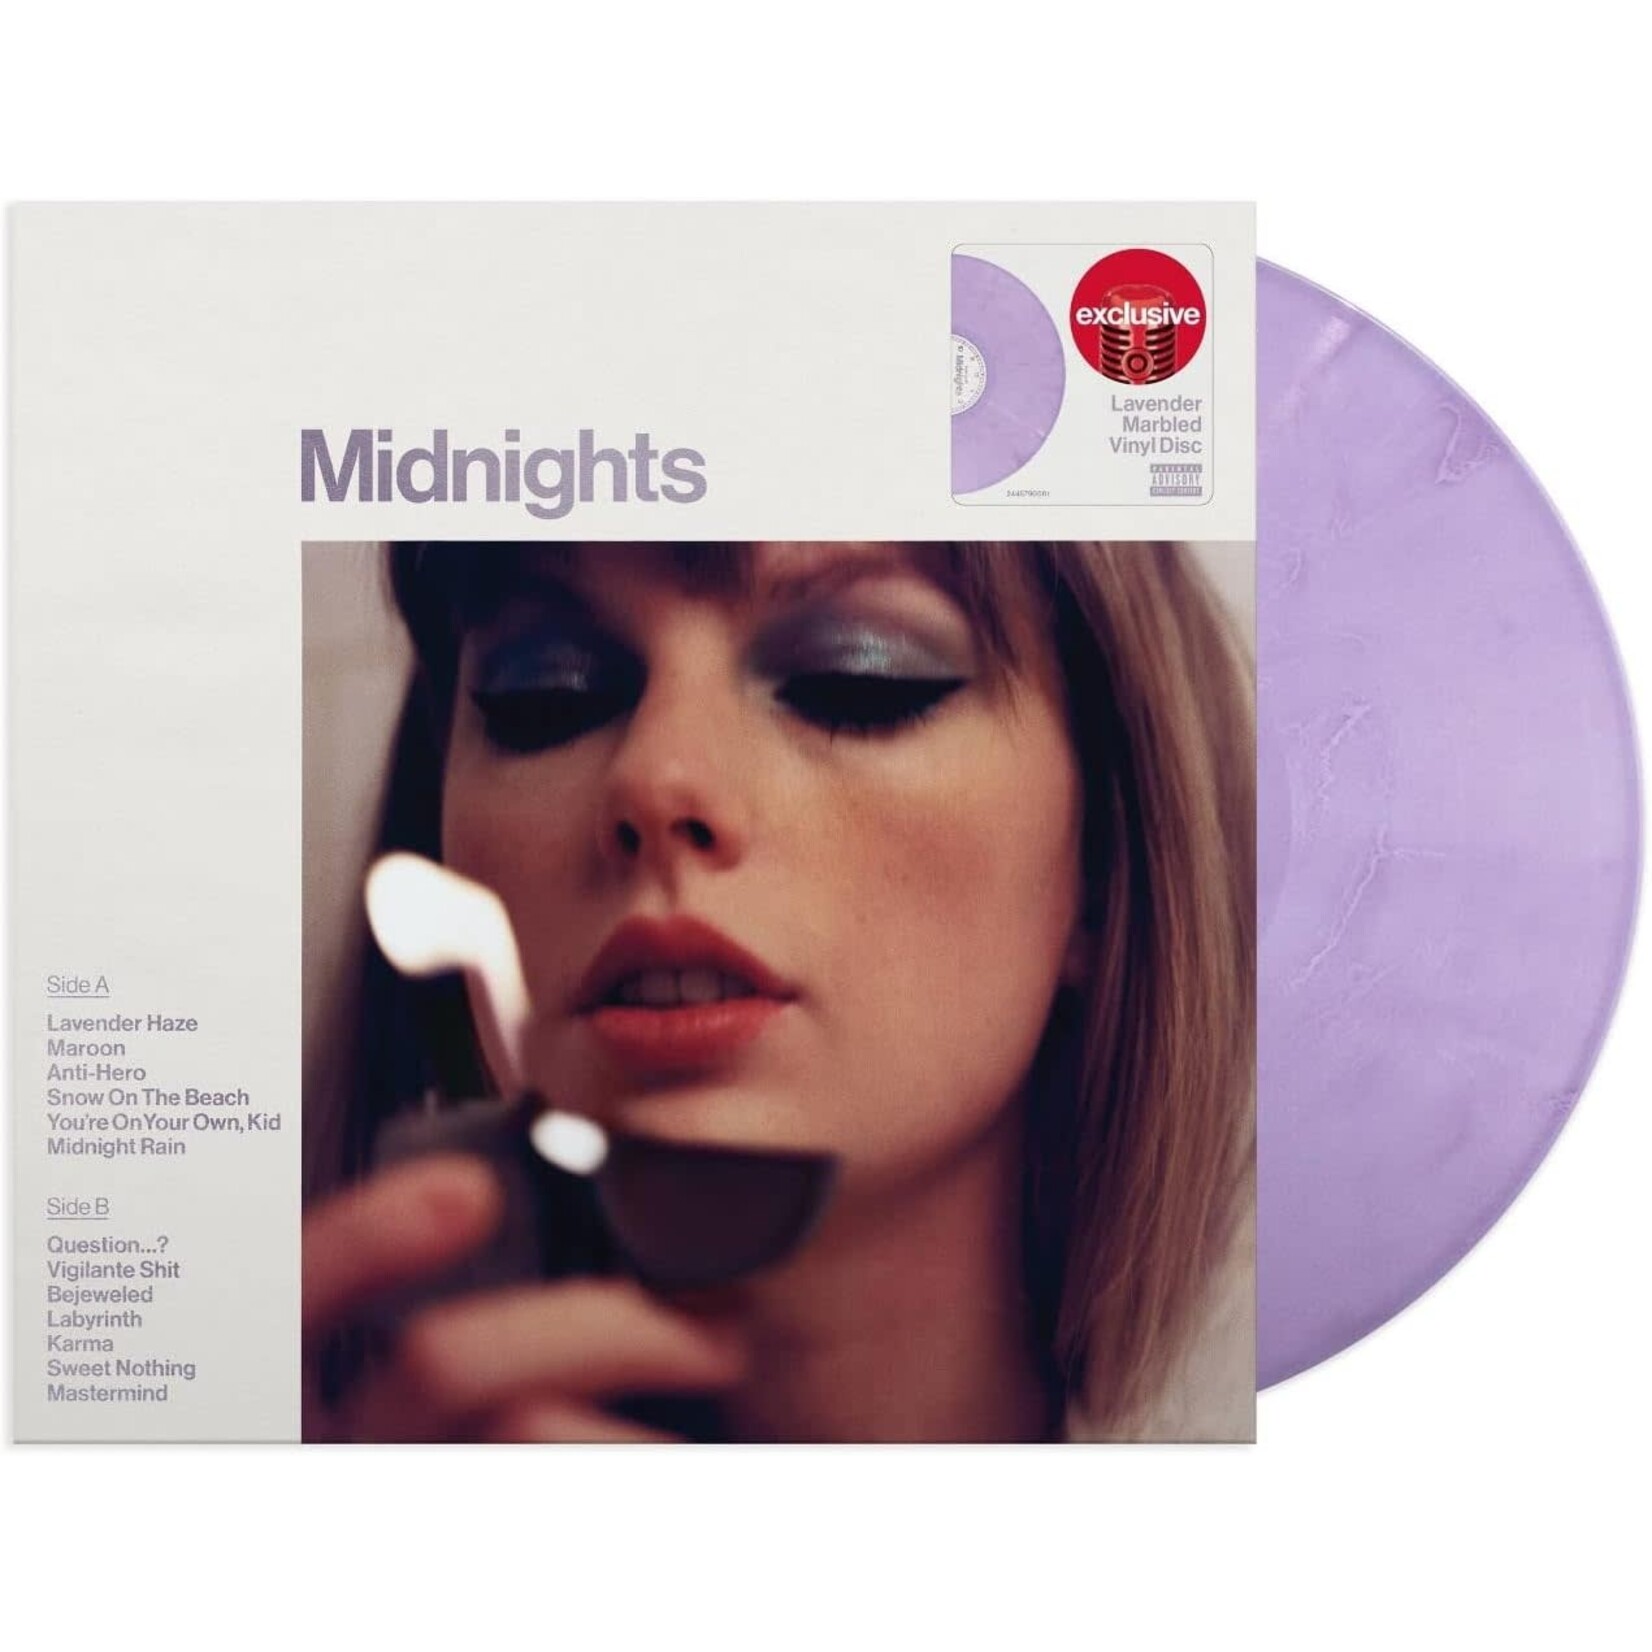 [New] Swift, Taylor: Midnights (lavender marble vinyl) [REPUBLIC]